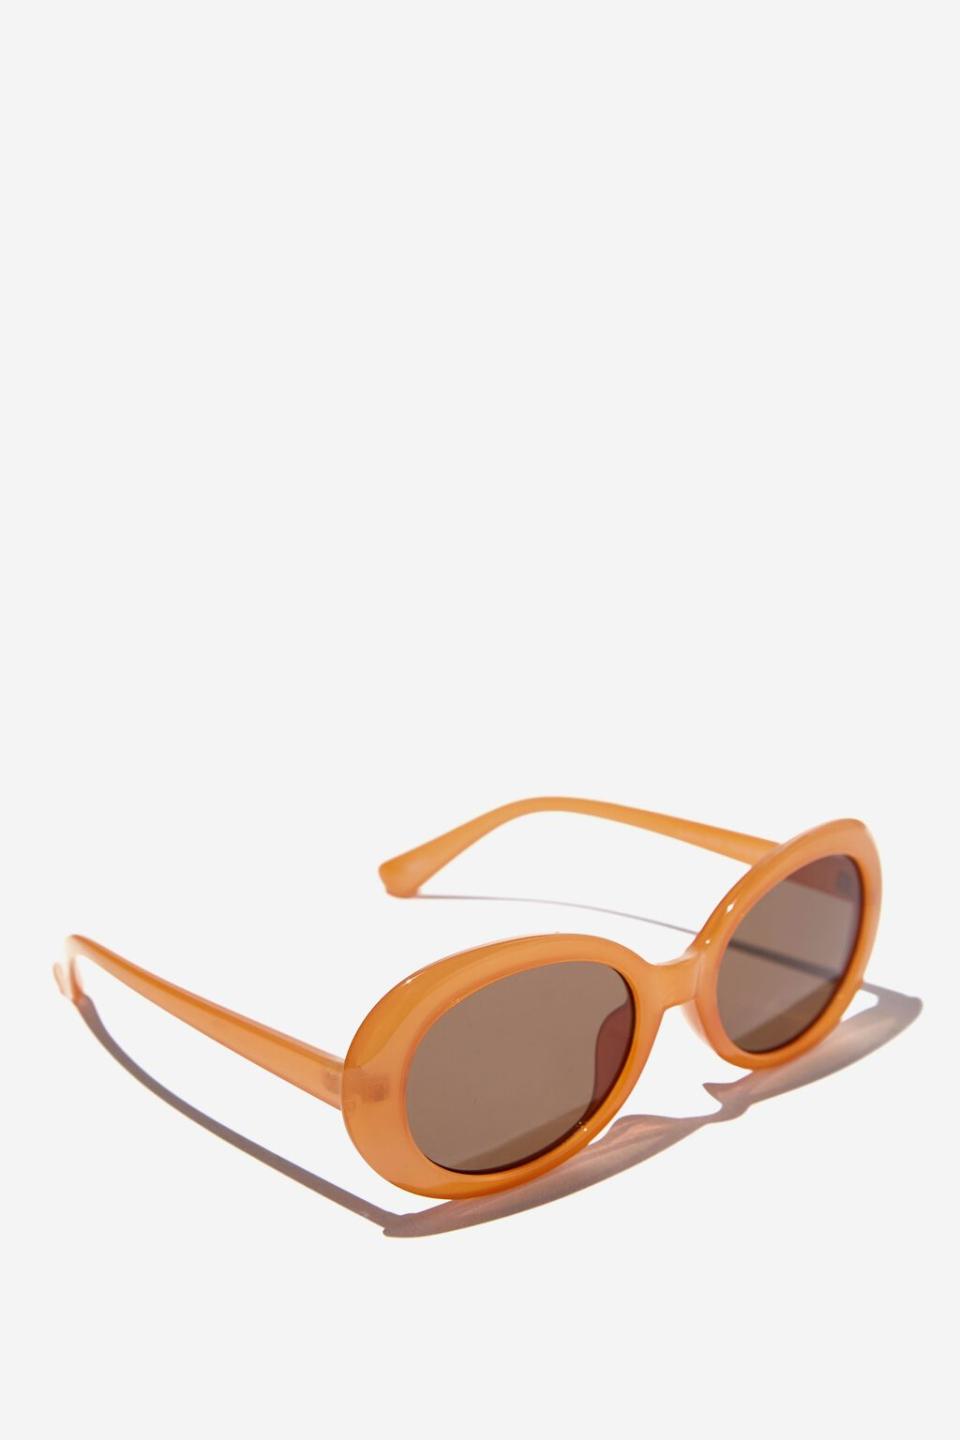 Burnished oval sunglasses with darker lenses. Olivia Oval Sunglasses, $19.99